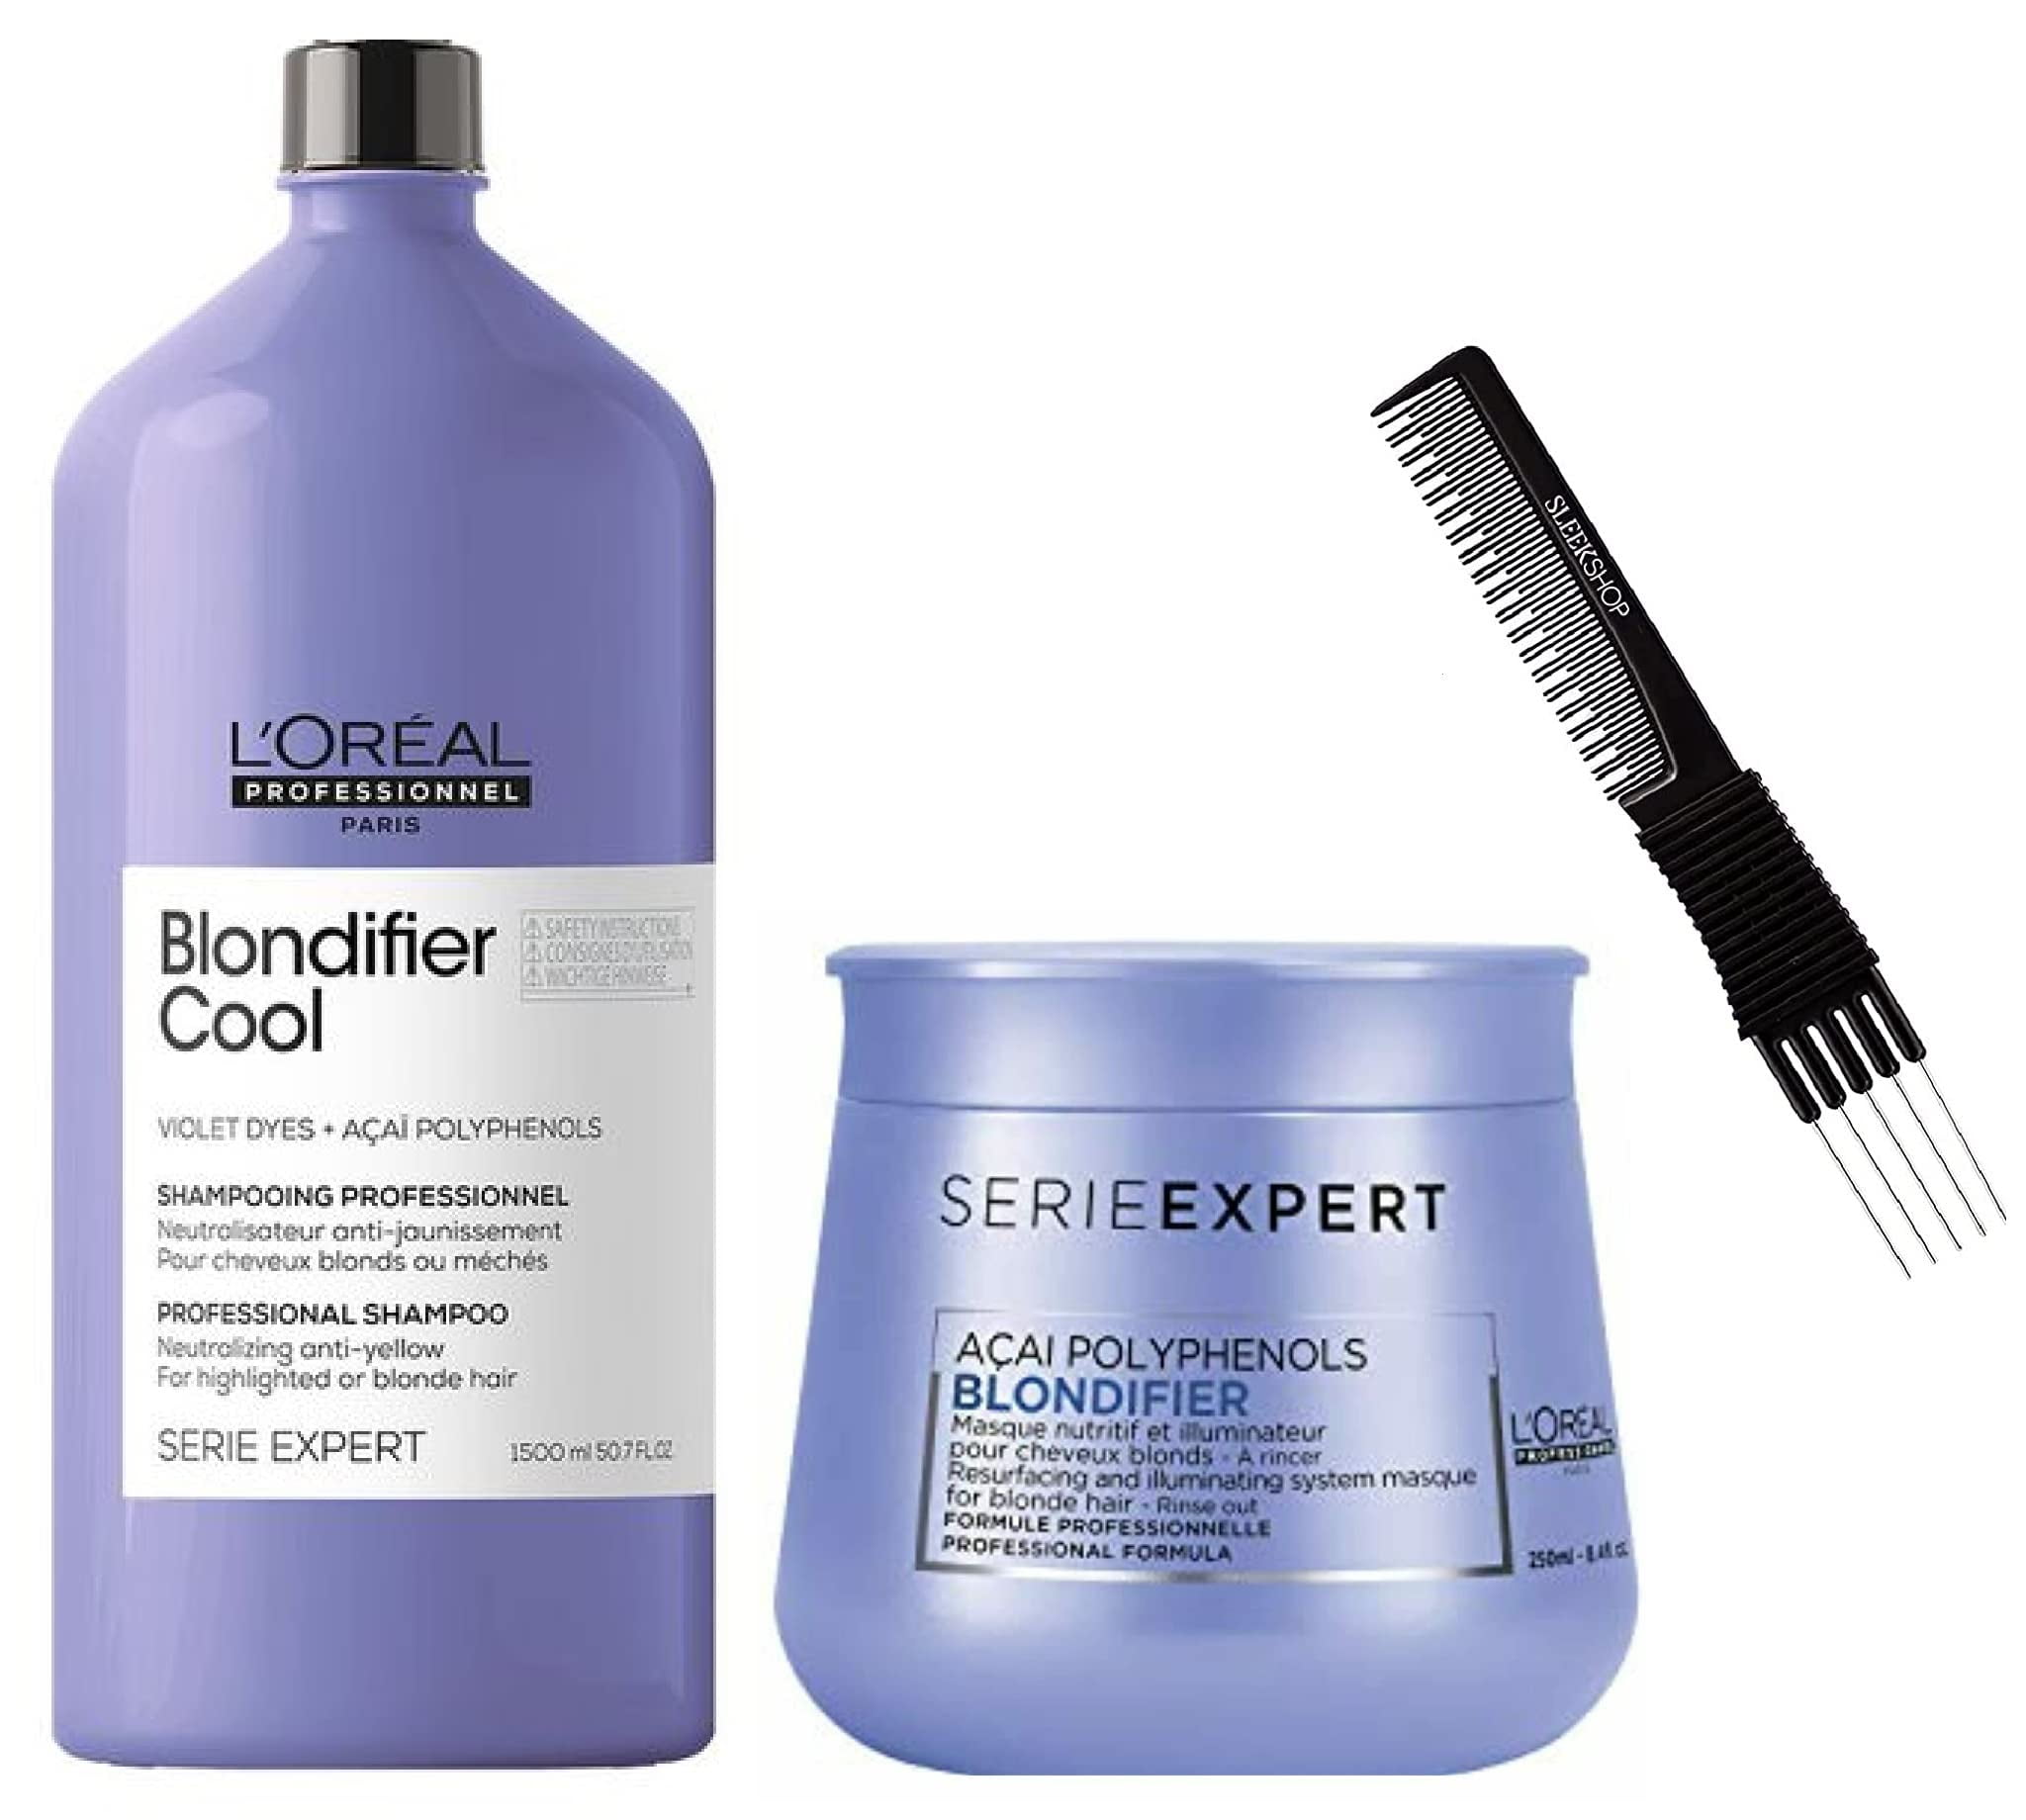 L'oreal SERIE EXPERT Blondifier COOL Neutralizing Anti-Yellow Shampoo & Mask  DUO SET for Blonde Hair Masque (w/ Sleek Loreal Teasing Comb) (BLONDIFIER  COOL Mask DUO  oz +  oz) 